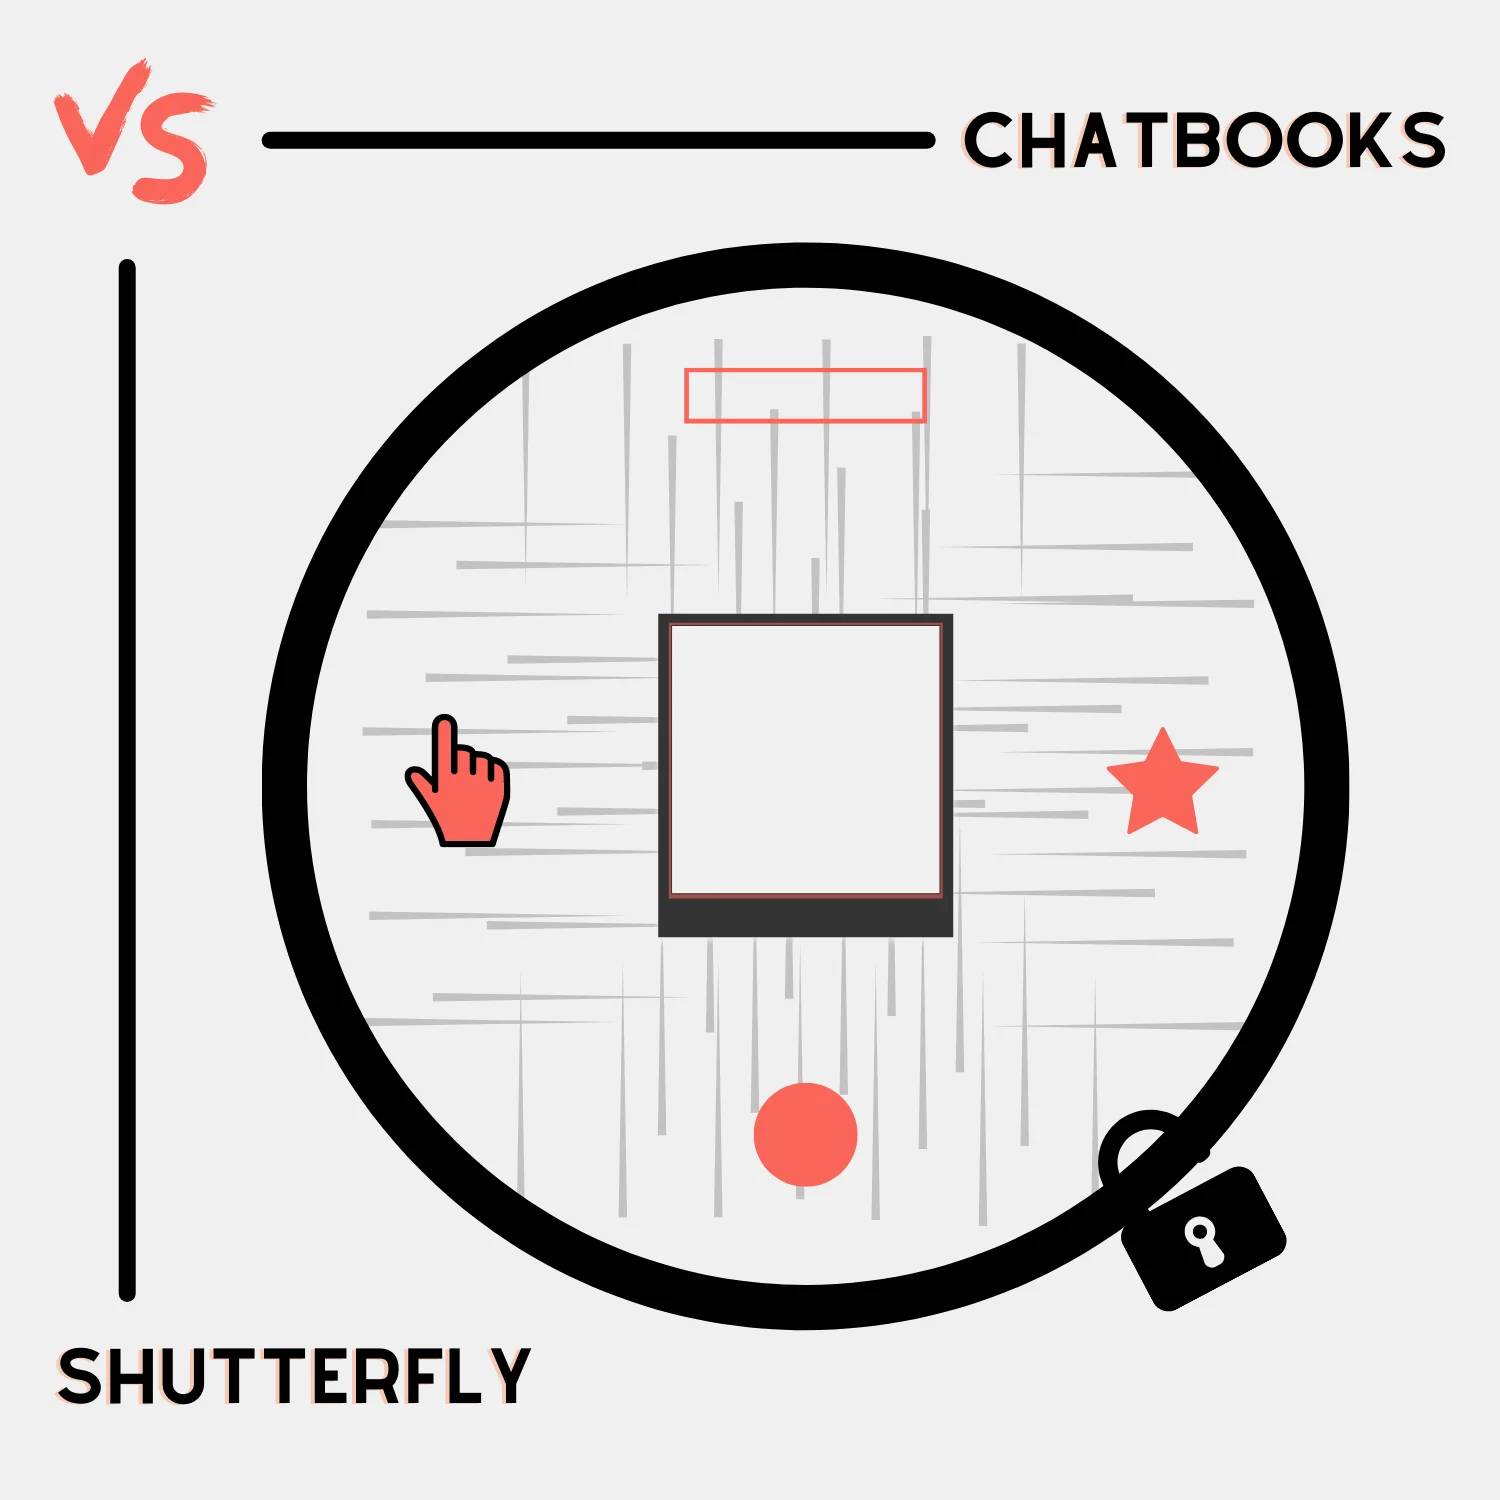 Chatbooks vs. Shutterfly